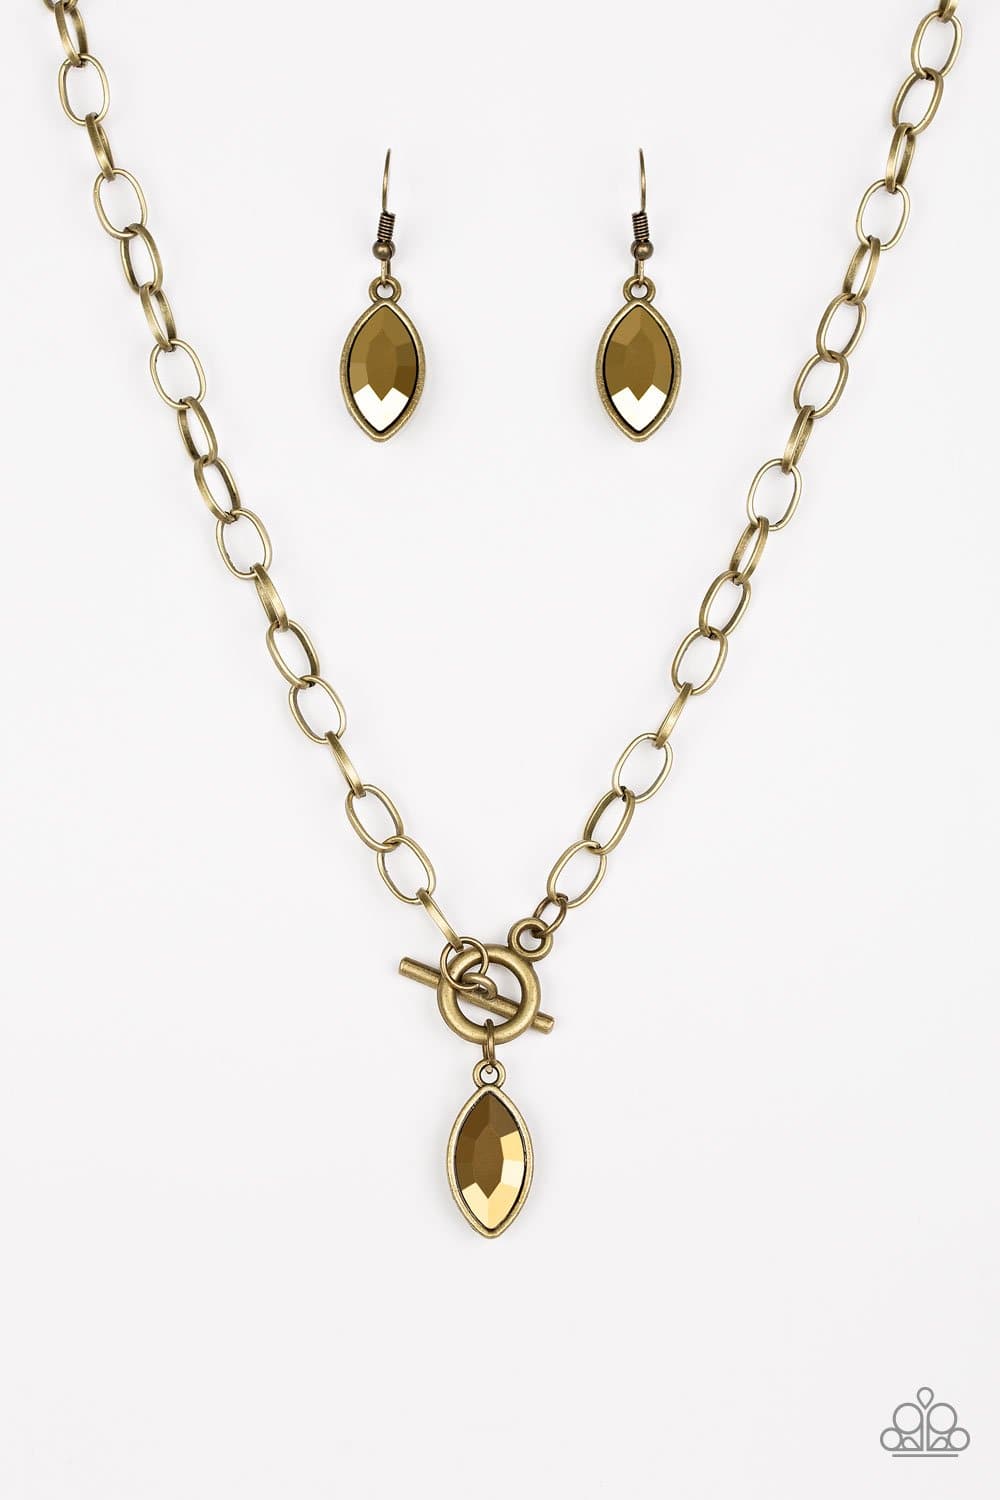 Club Sparkle - Brass Glittery Aurum Rhinestone Necklace - Paparazzi Accessories - GlaMarous Titi Jewels